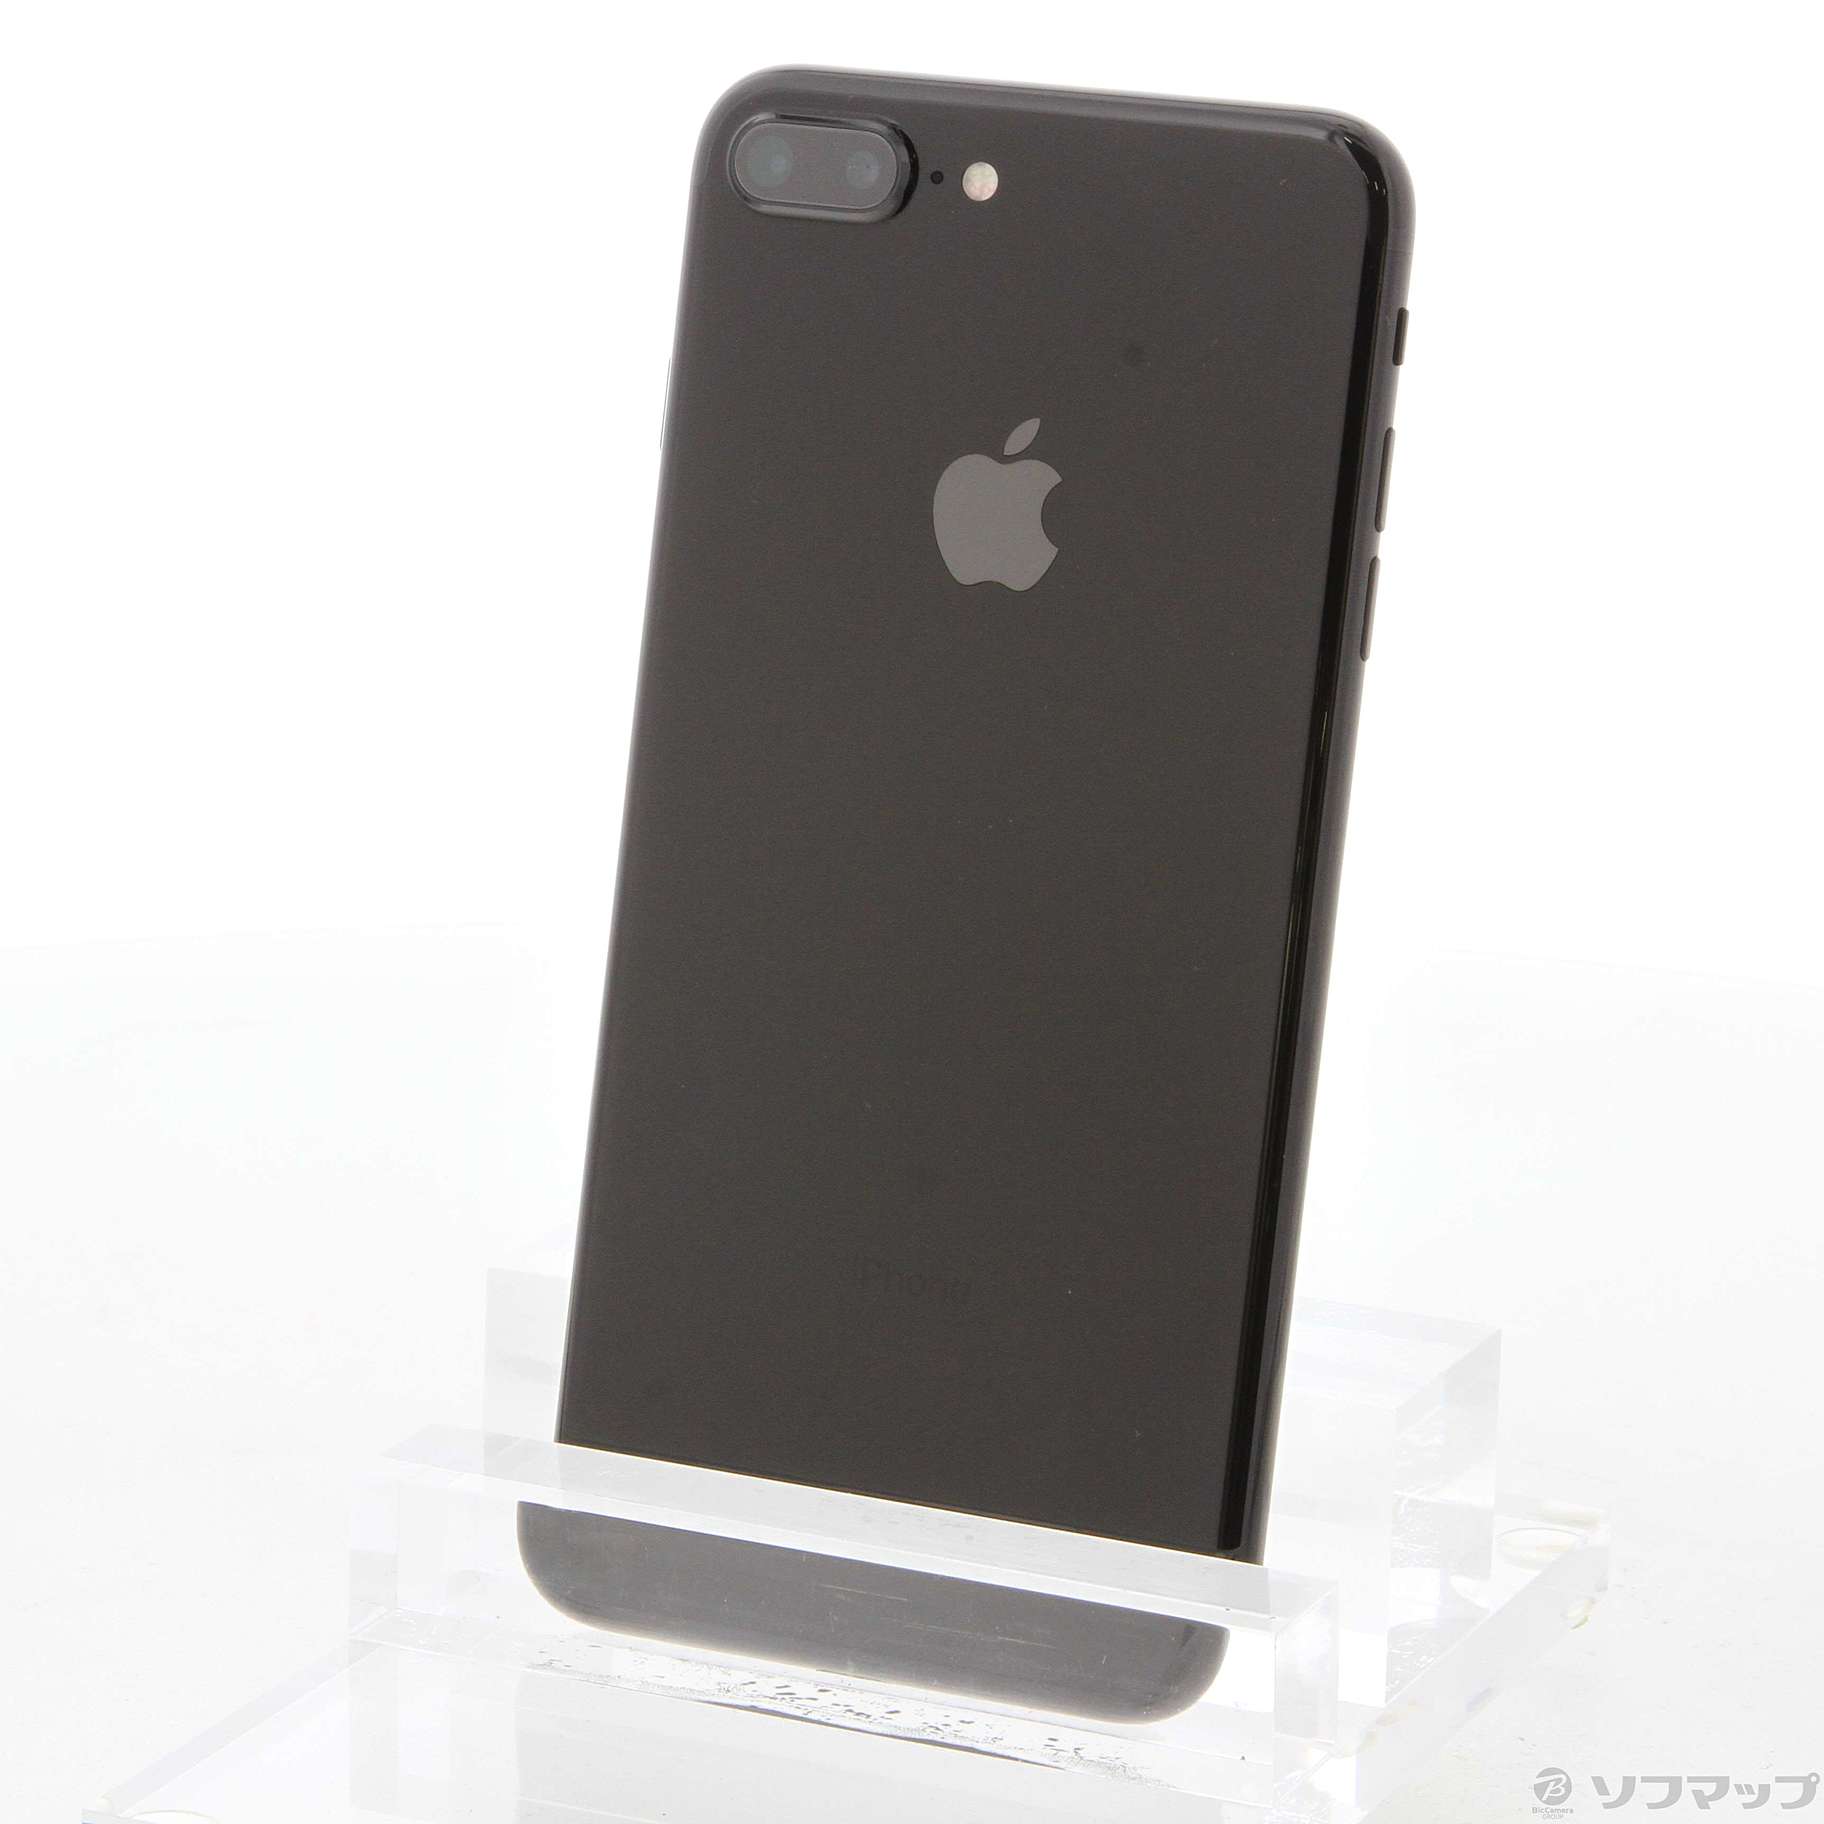 iPhone 7 Jet Black 32 GB SIMフリー